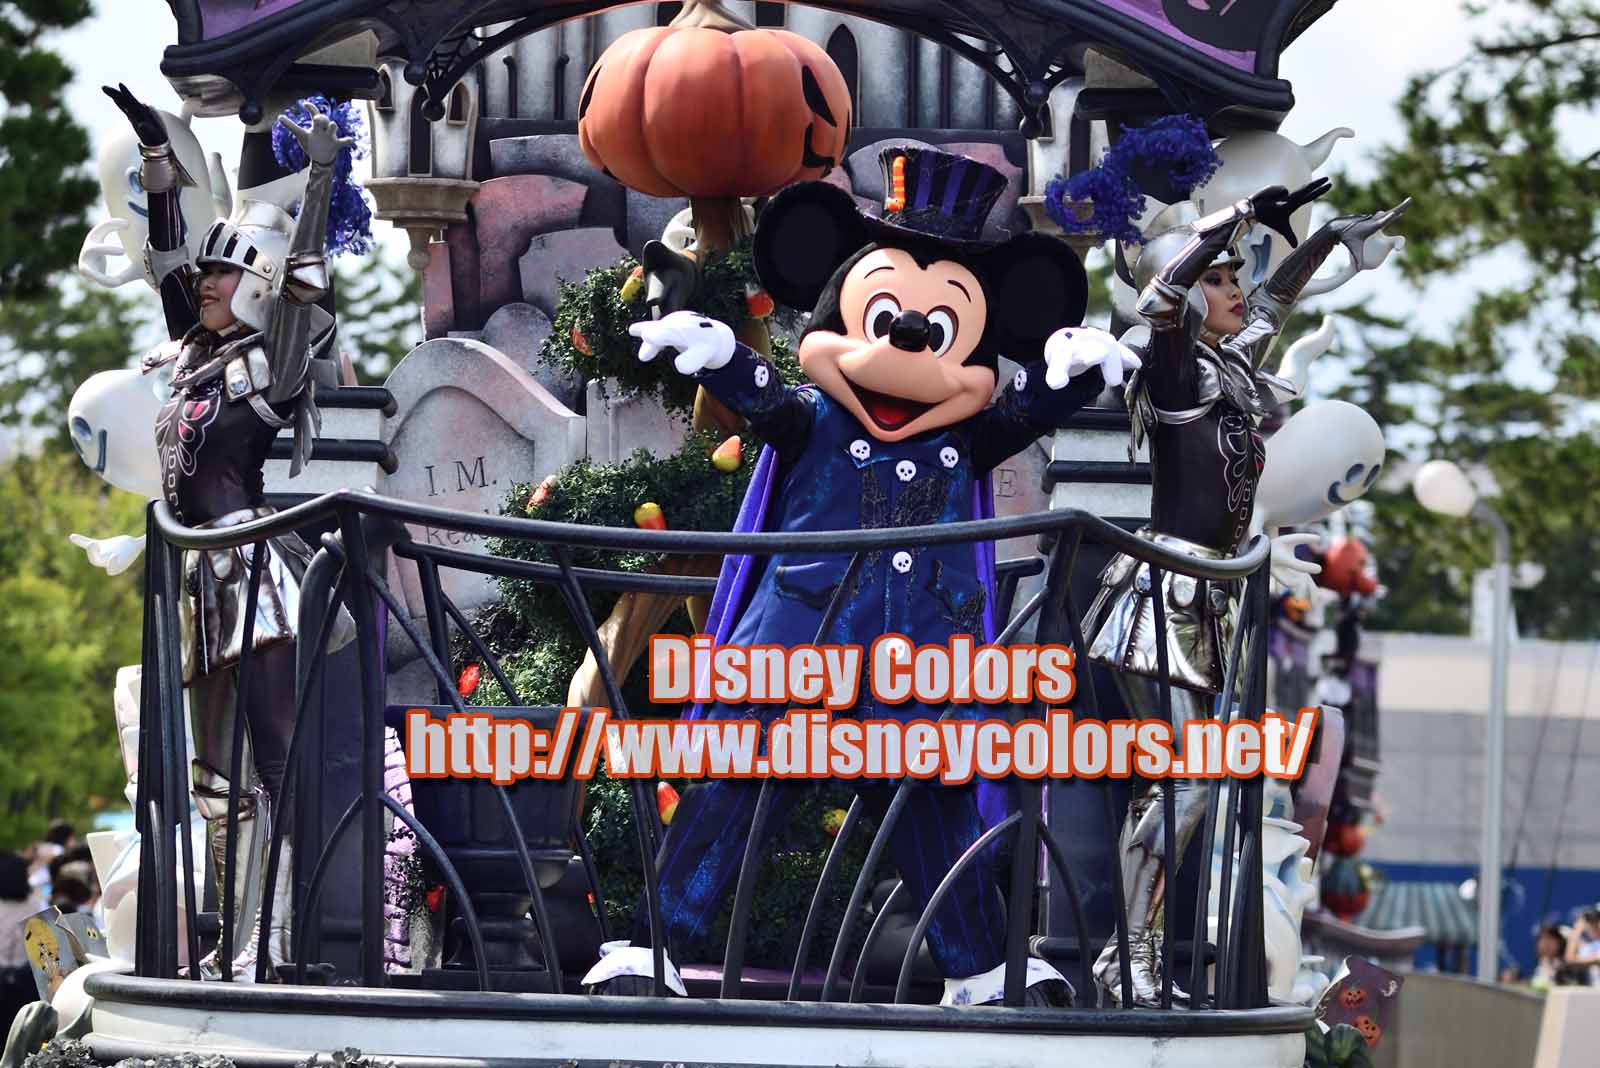 Tdl スプーキー Boo パレード18 フロート停止位置 鑑賞ガイド Disney Colors Event Guide